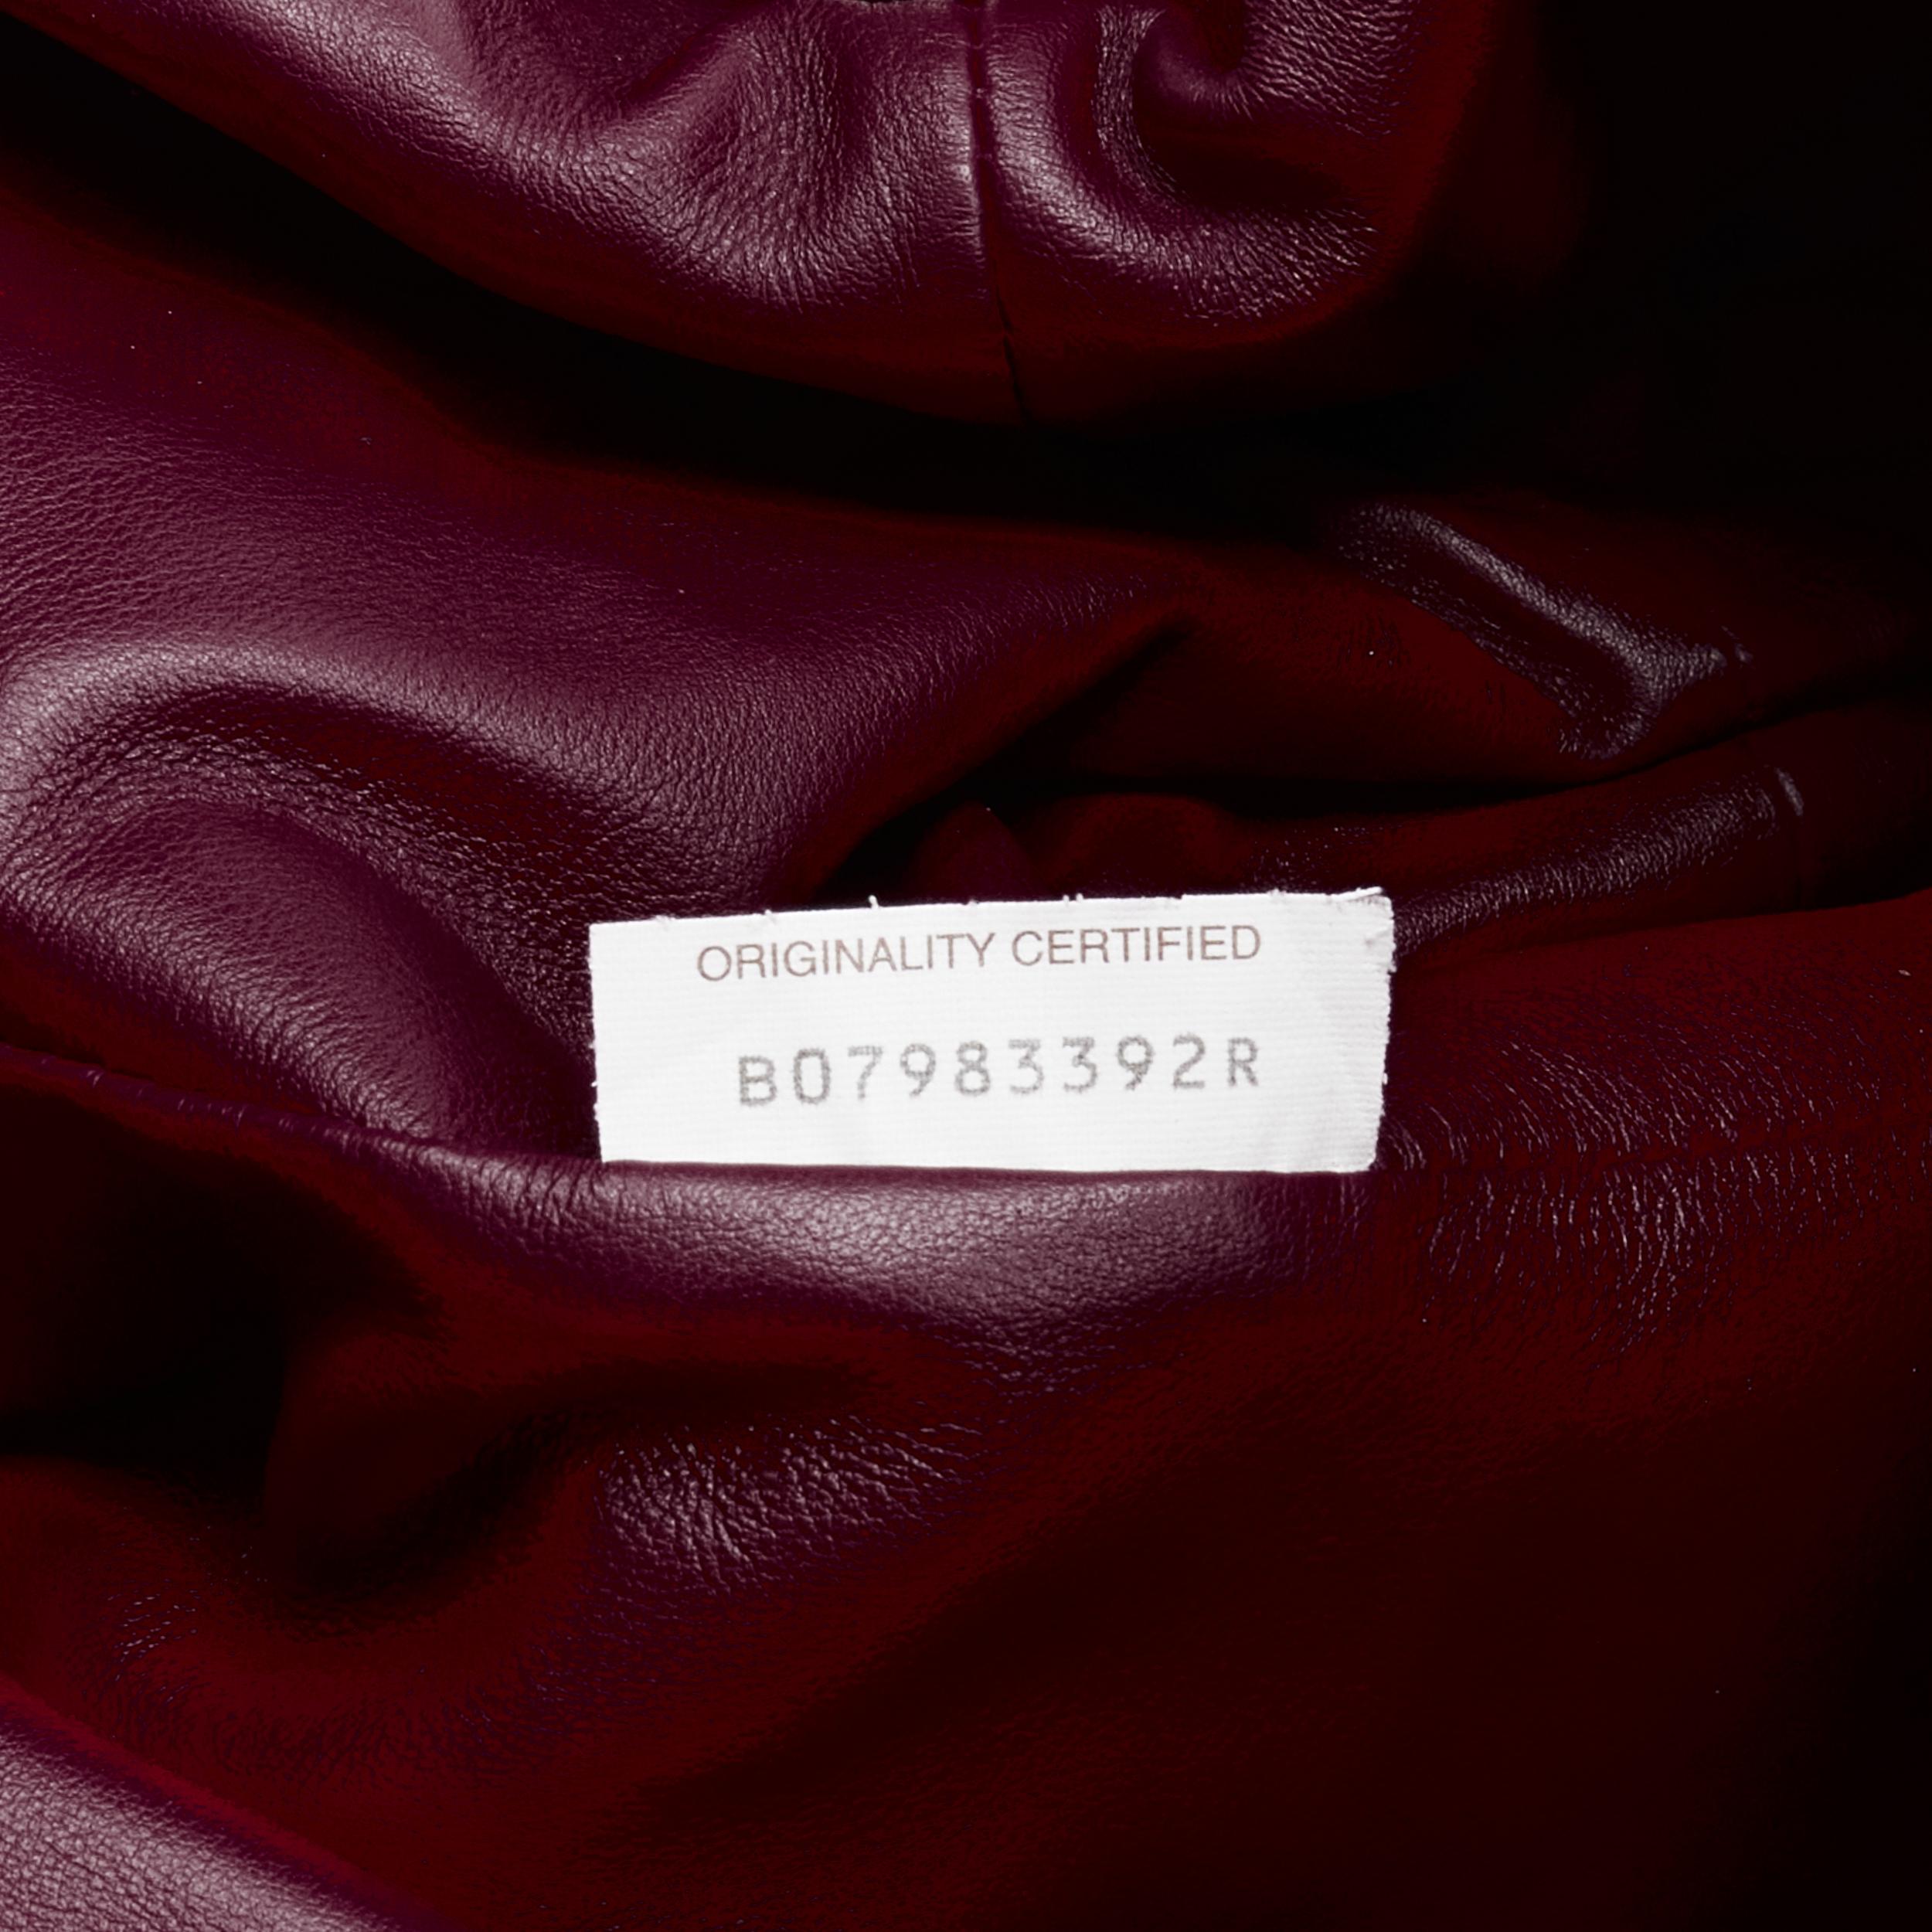 BOTTEGA VENETA The Pouch burgundy red soft lambskin leather clutch bag For Sale 3